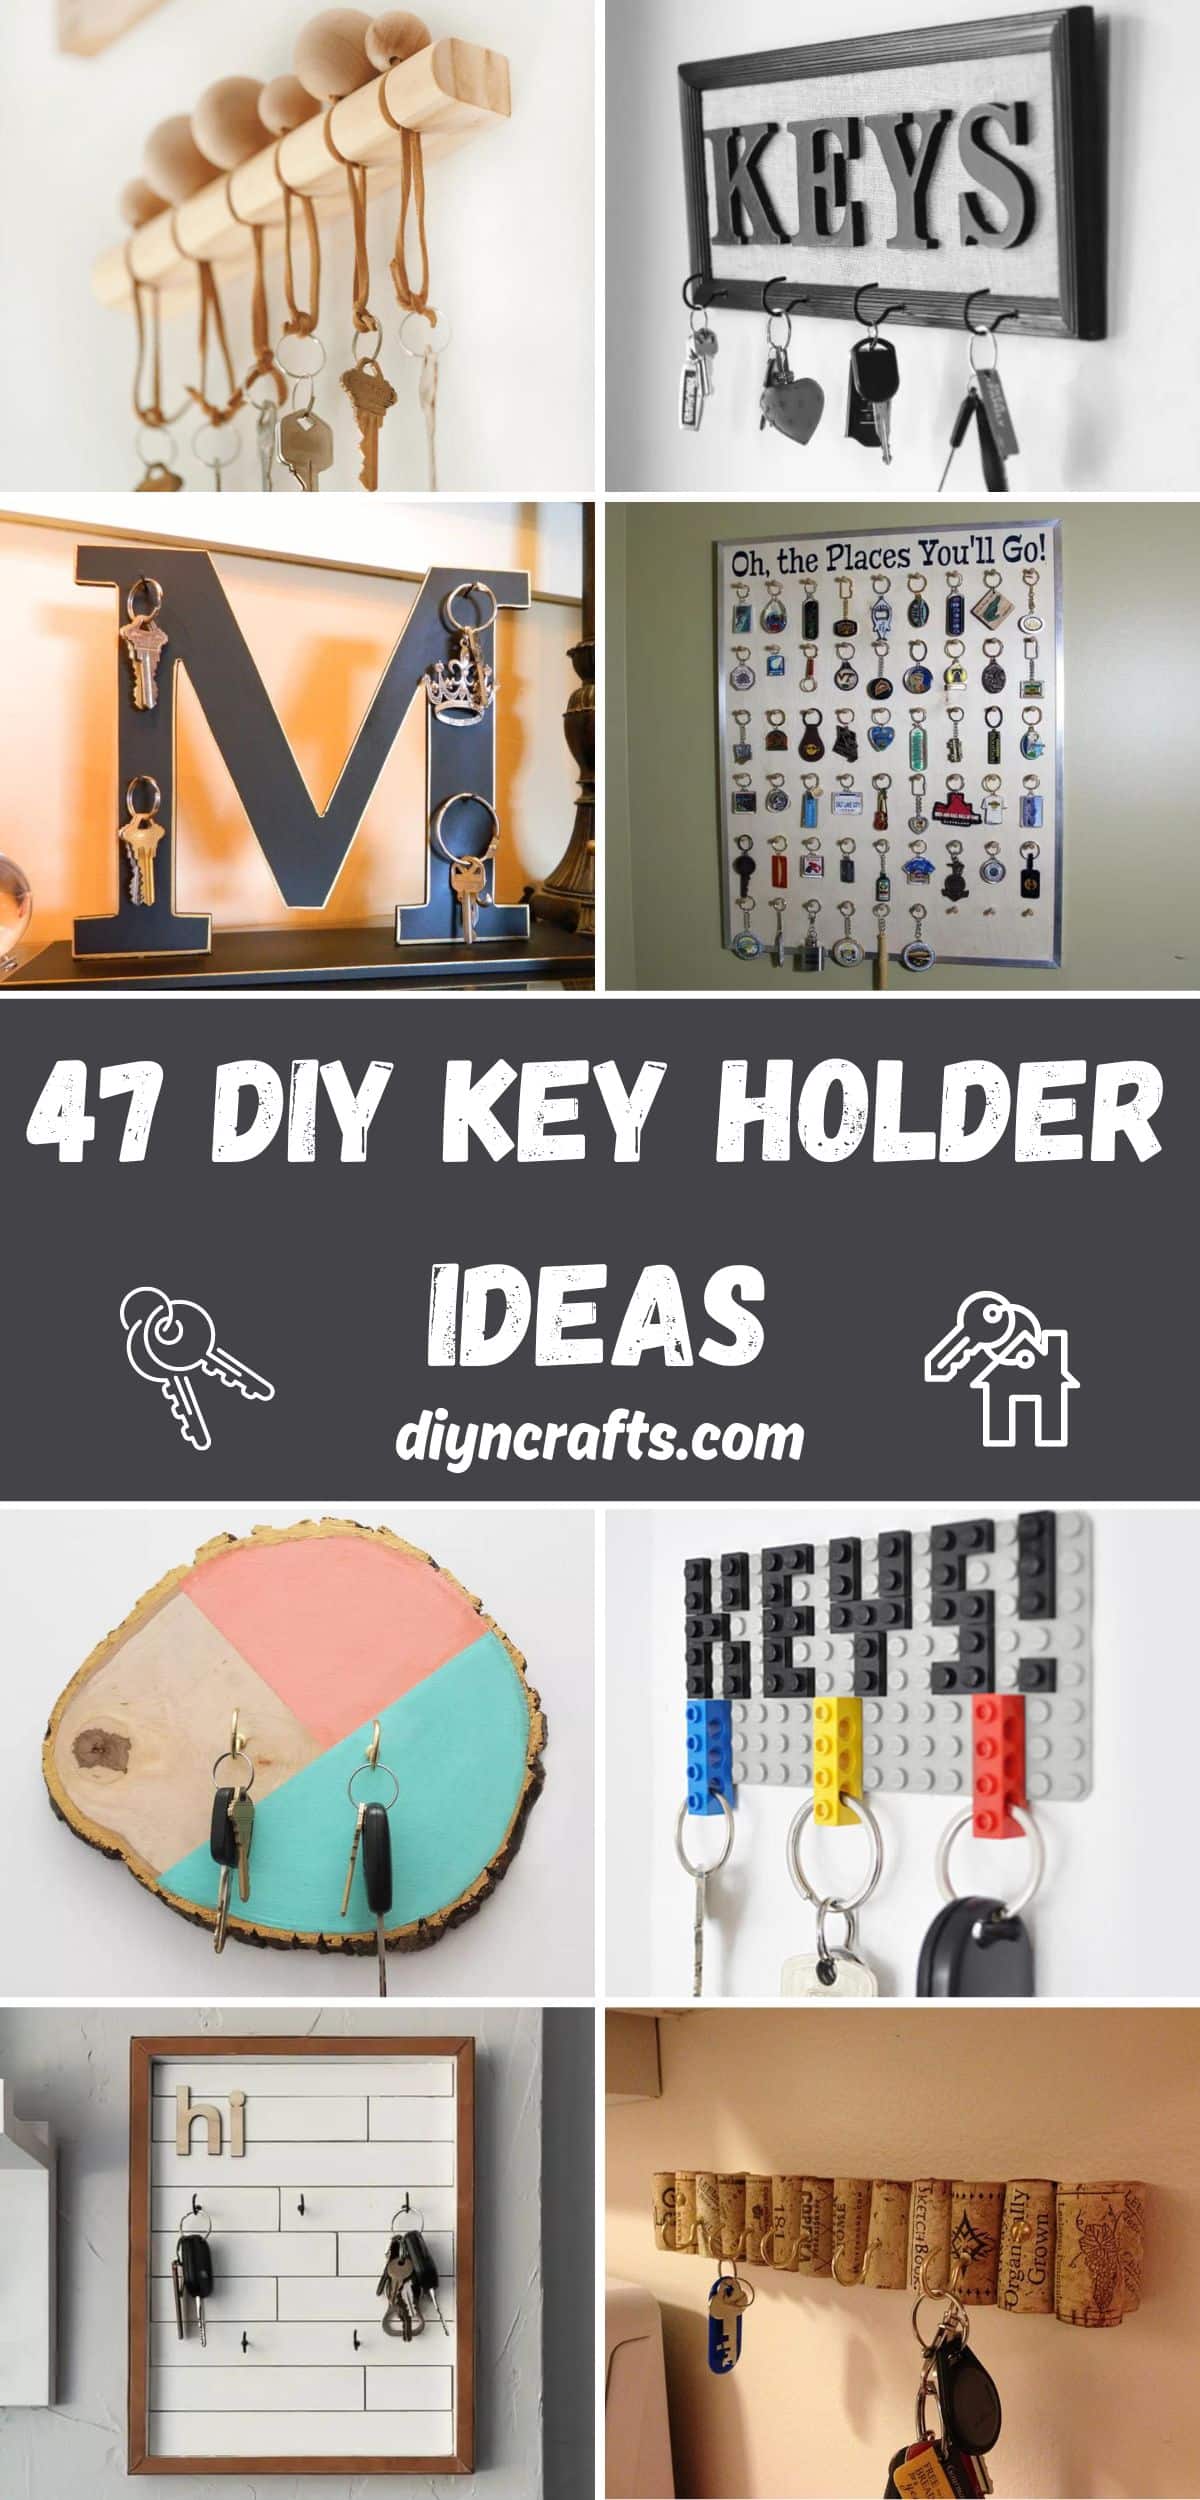 47 DIY Key Holder Ideas collage.